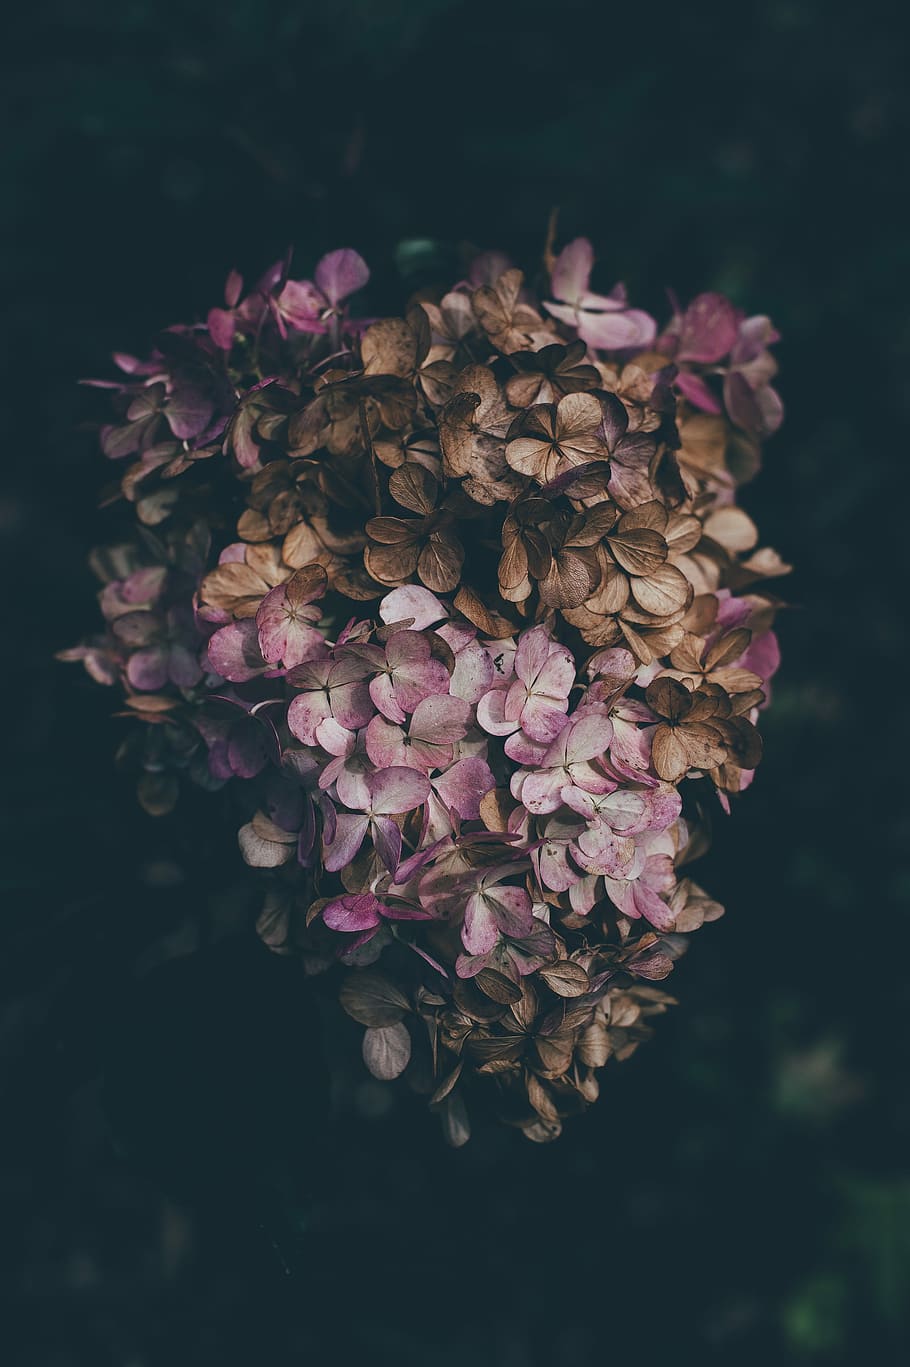 fotografi bidikan makro, coklat, merah muda, bunga, bidikan makro, fotografi, hitam, kelopak, tanaman, ungu